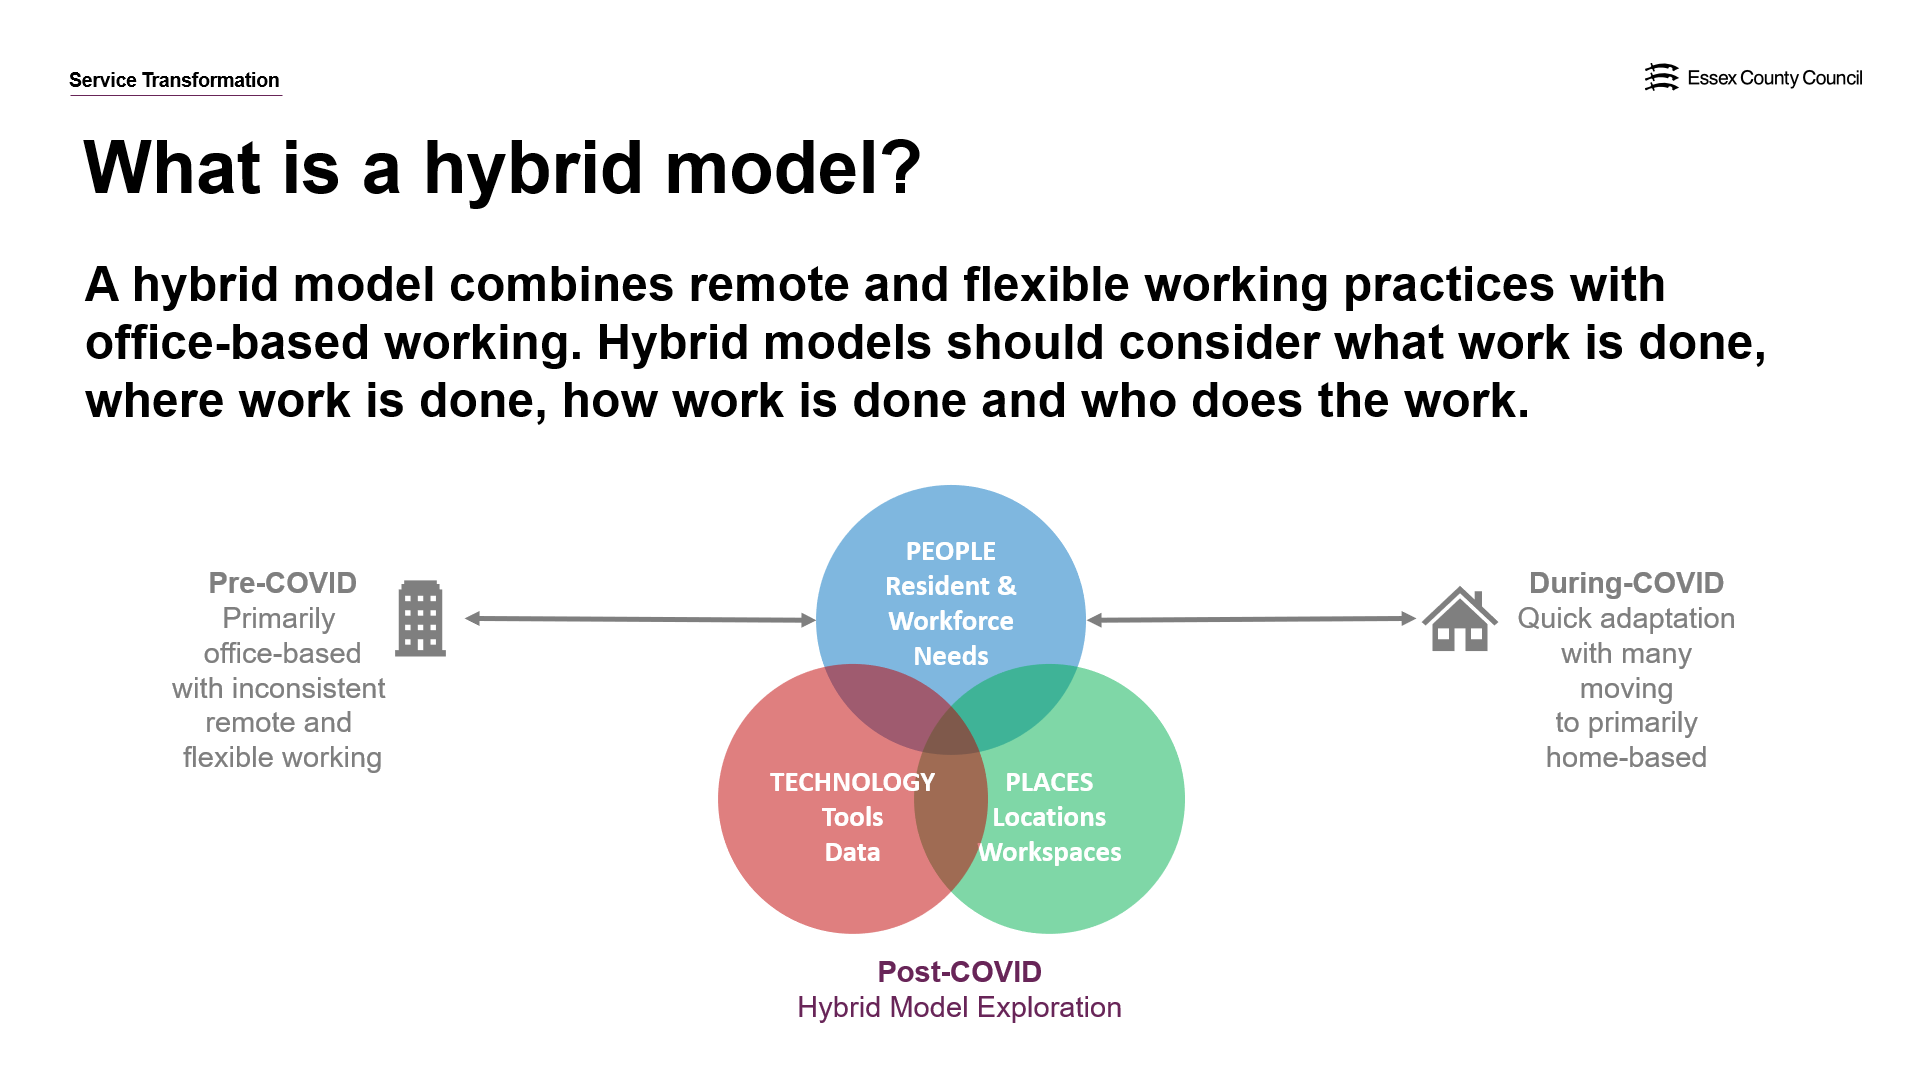 Hybrid models